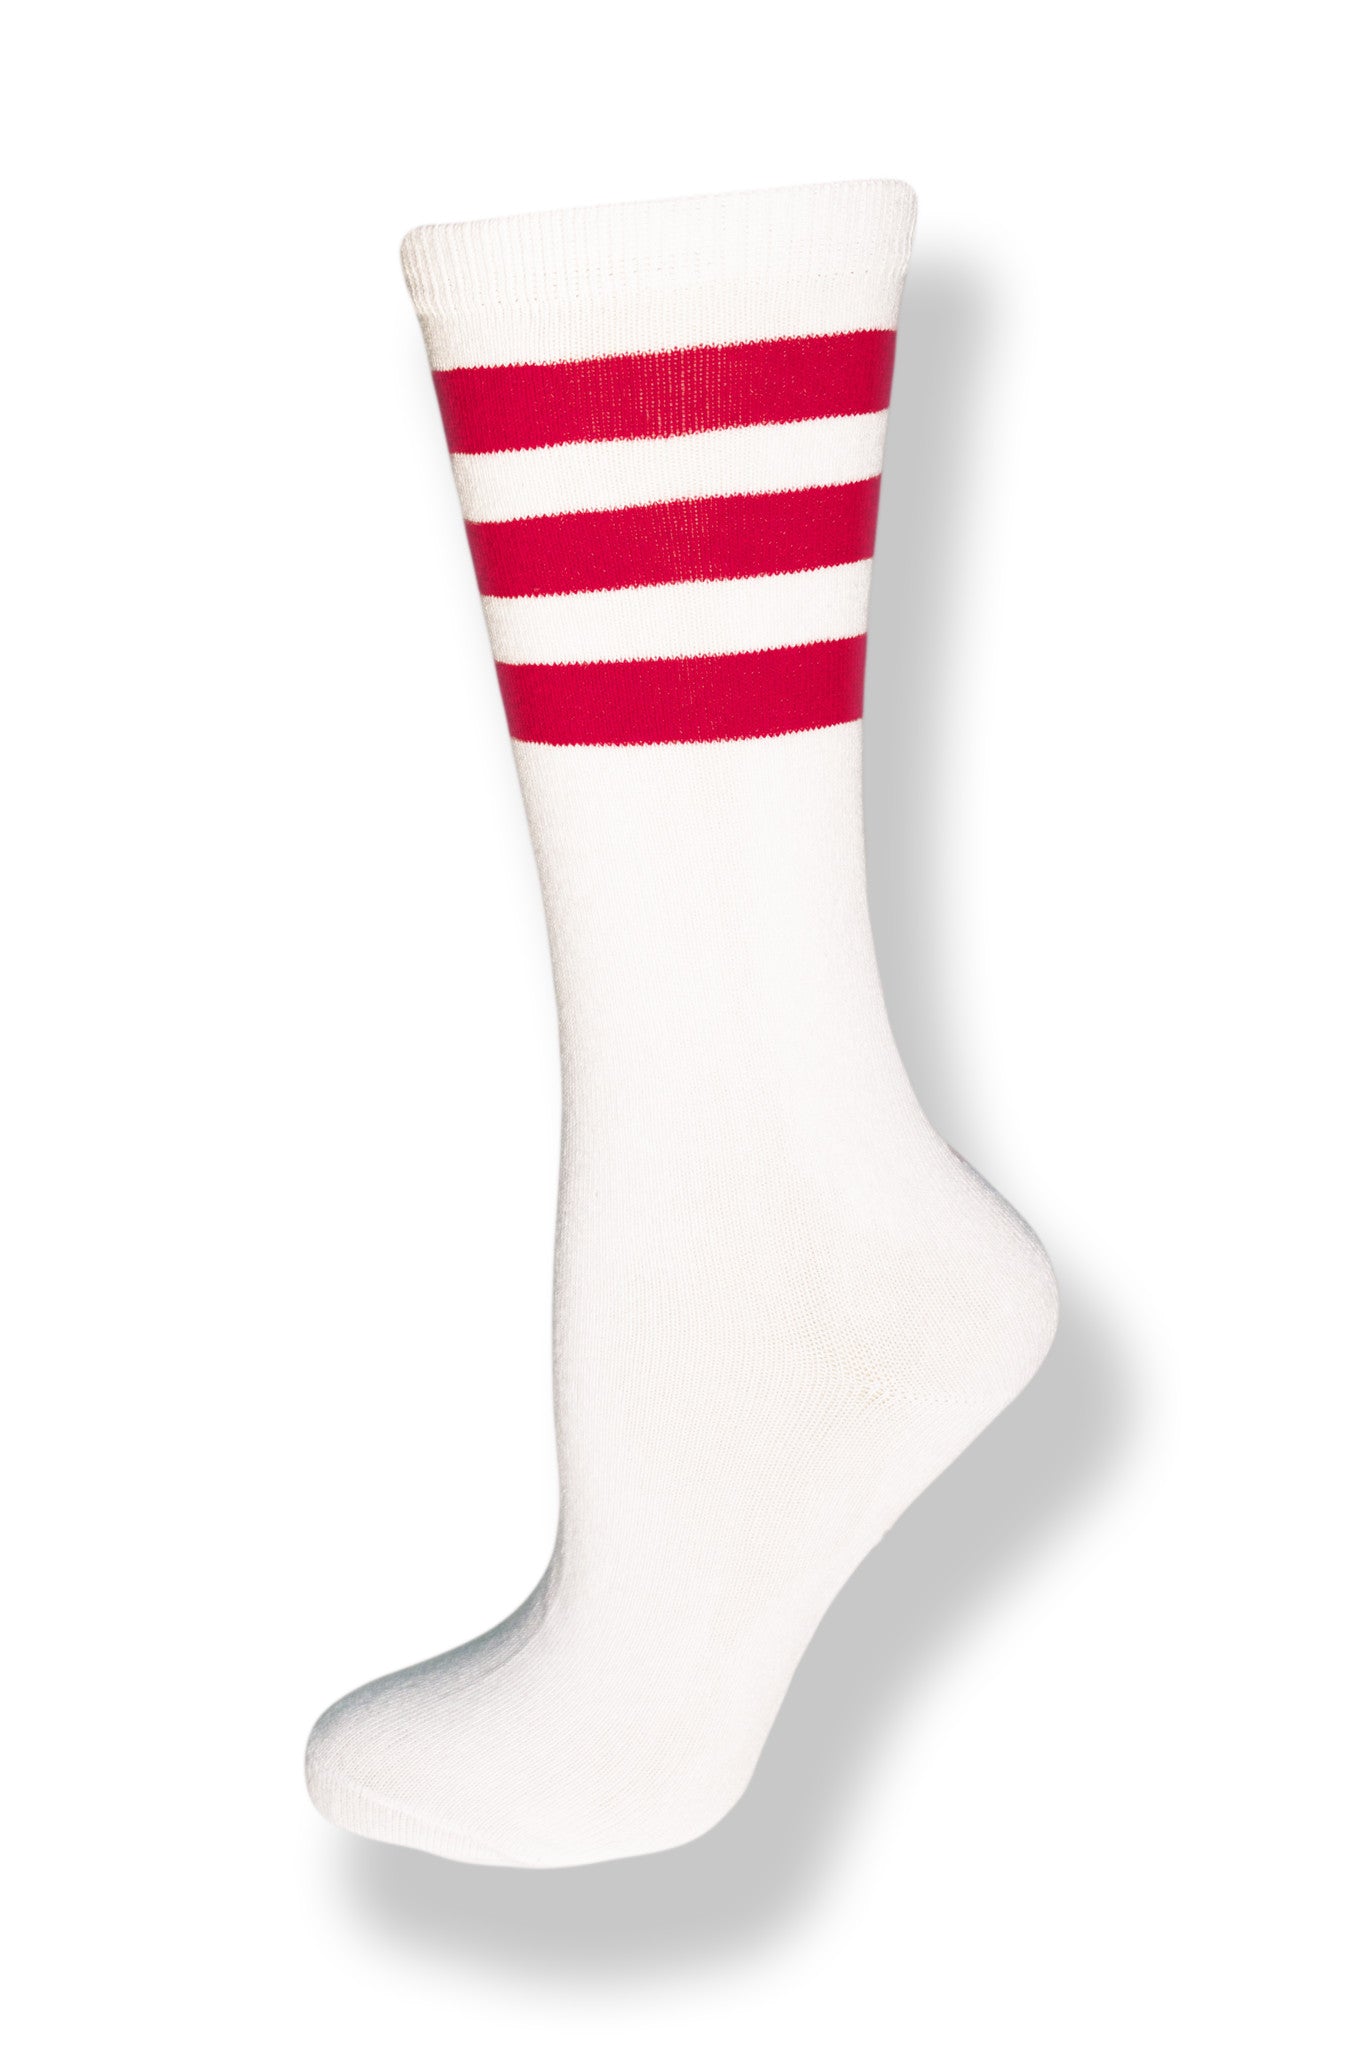 Unisex Mid Calf High White Sock w/ Red Stripes